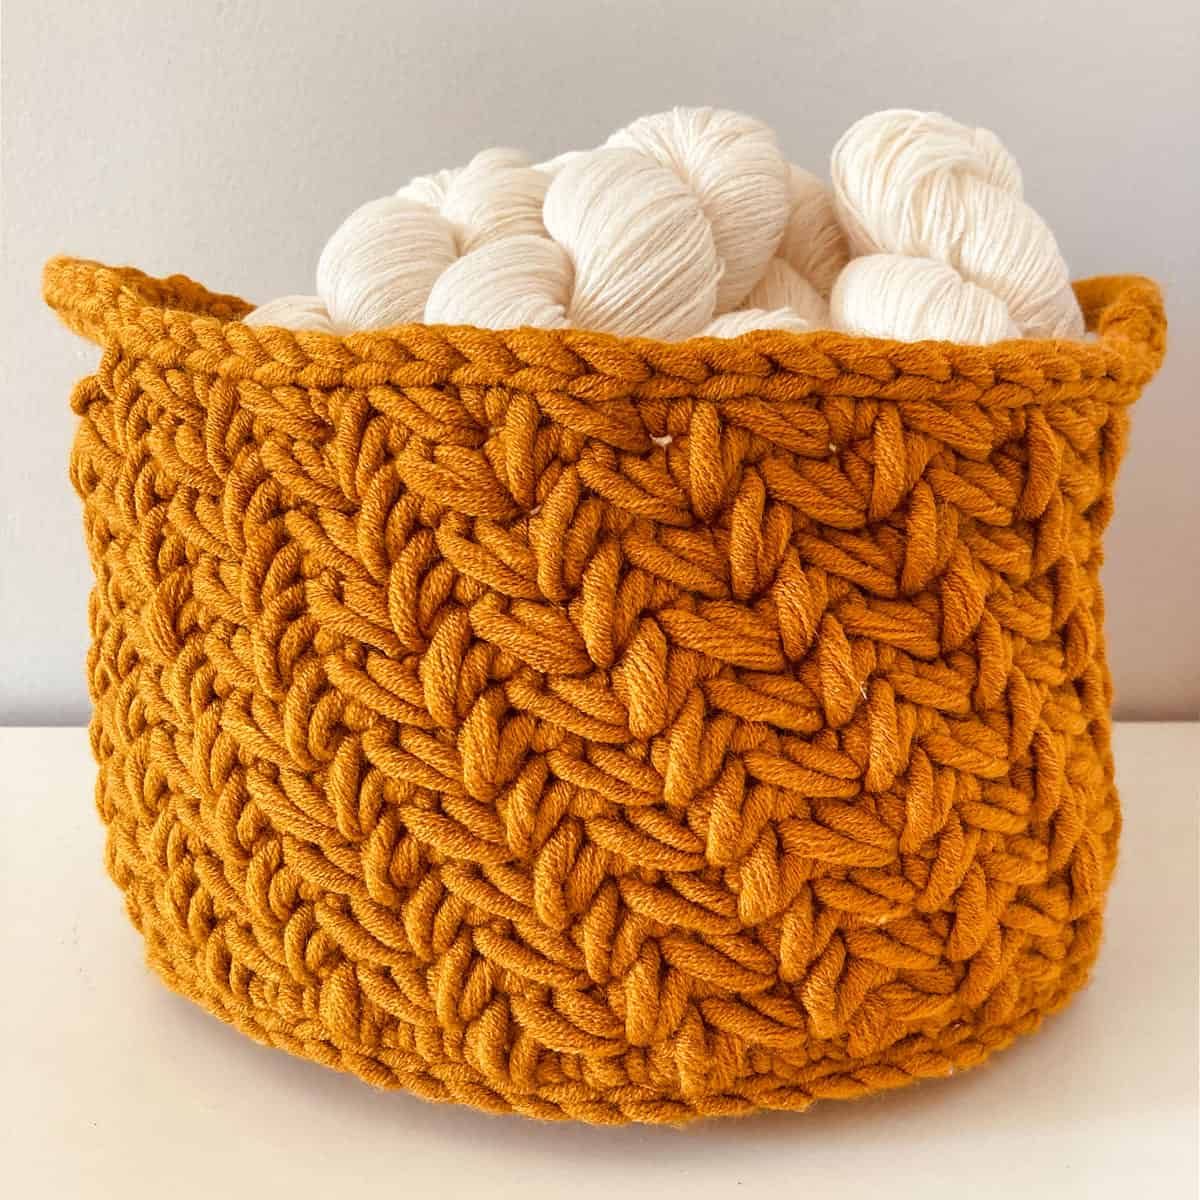 Crochet Storage Basket Pattern - How to Make A Crochet Basket